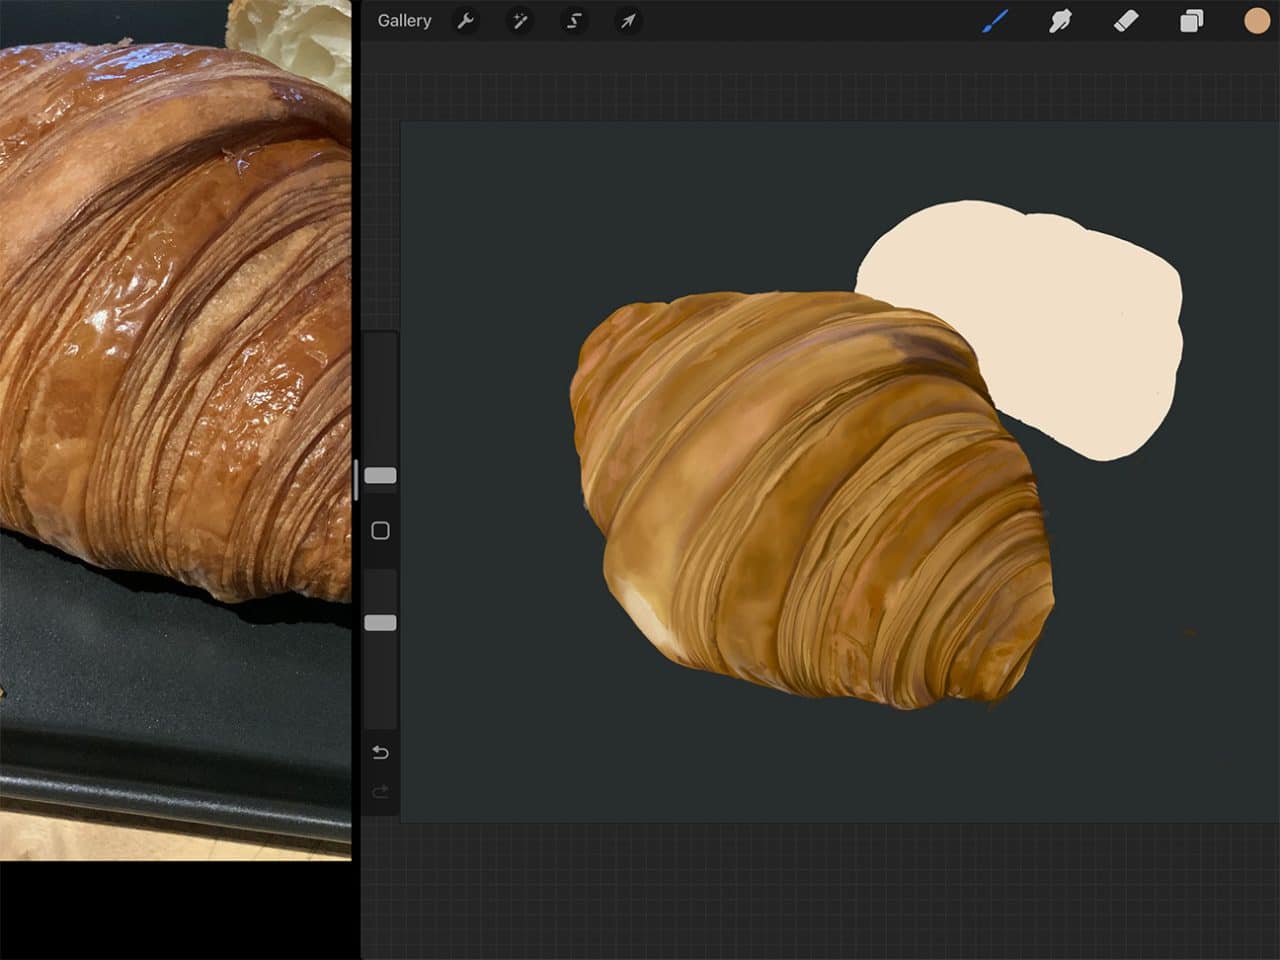 How to Draw Croissants: Build up your details bit by bit.